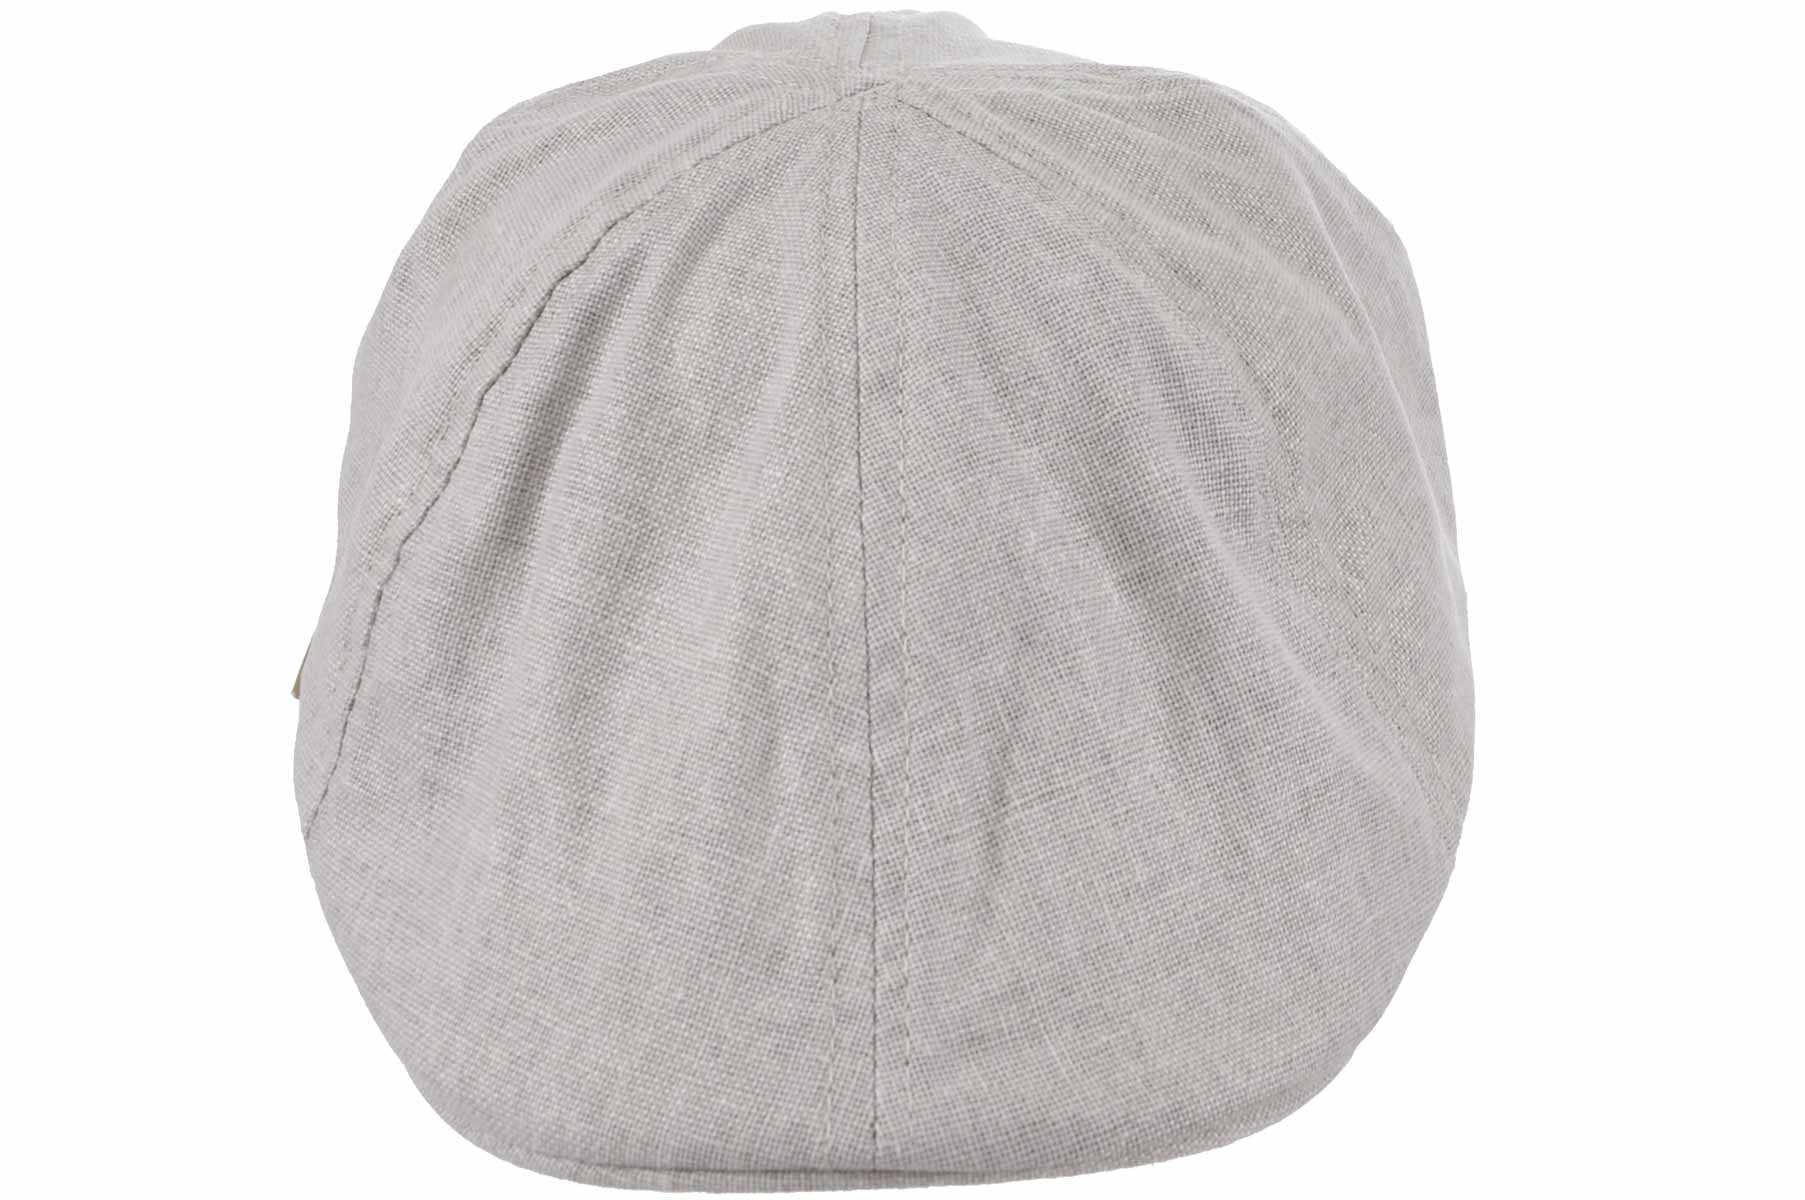 SEEBERGER Damen online Stoff »Baumwoll HATS 55196-0« SEEBERGER Schiebermütze bei kaufen Leinen Cap